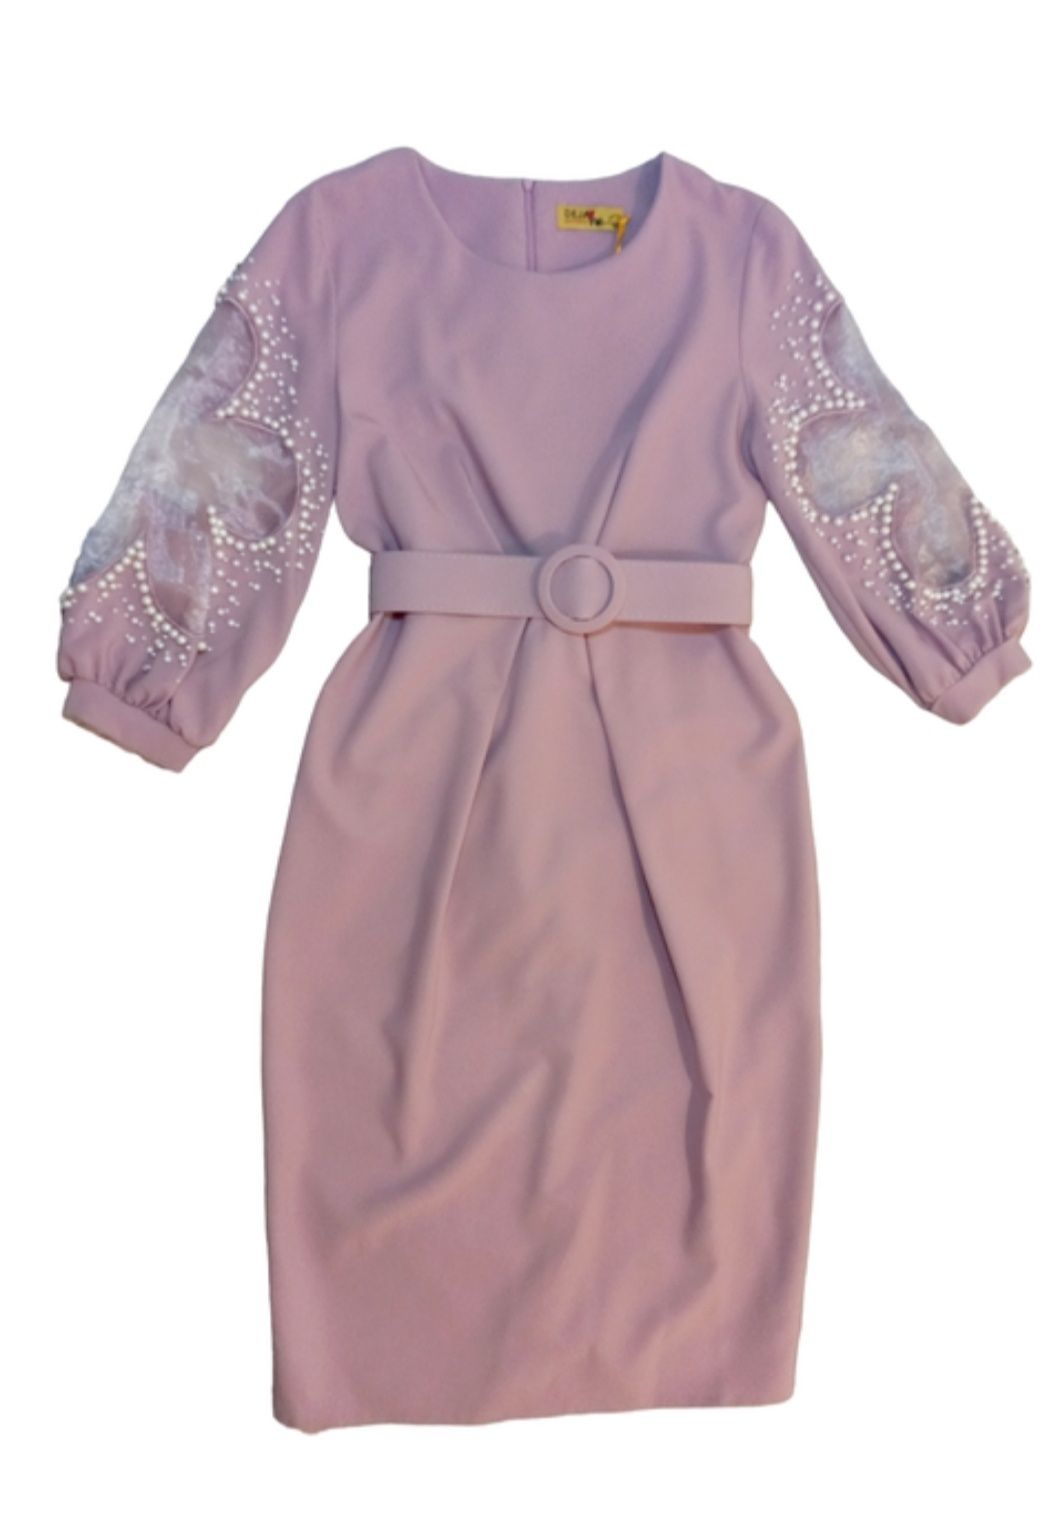 Плаття платье елегантне шикарне ділове нарядне сукня пудра рожеве 46